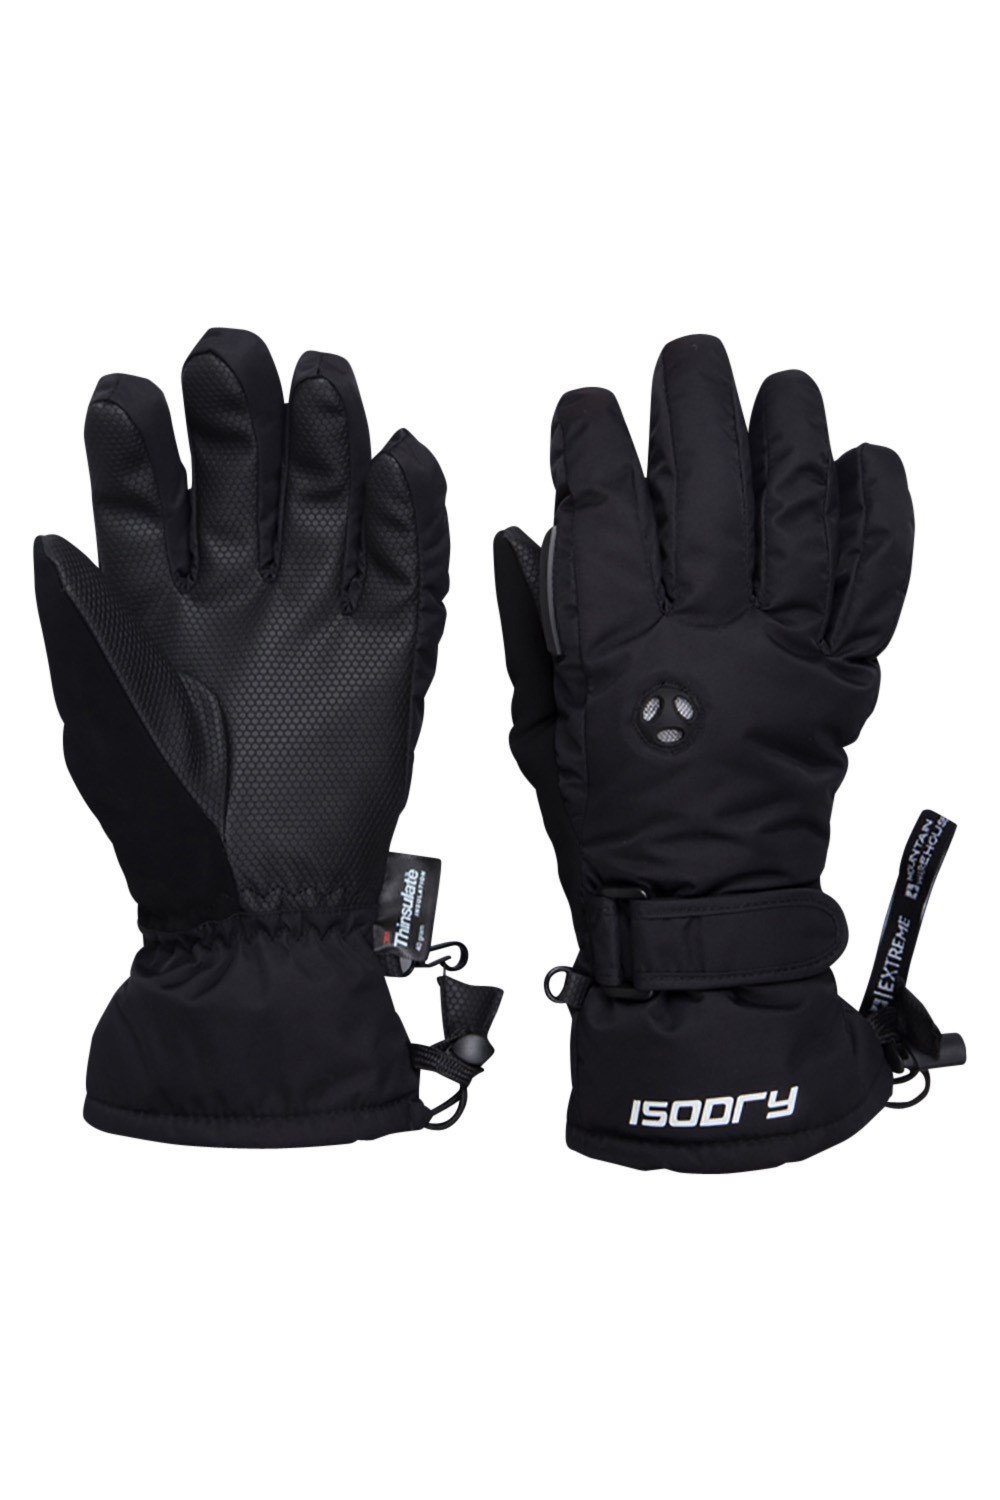 Mountain Warehouse Extreme Waterproof Womens Ski Gloves | eBay